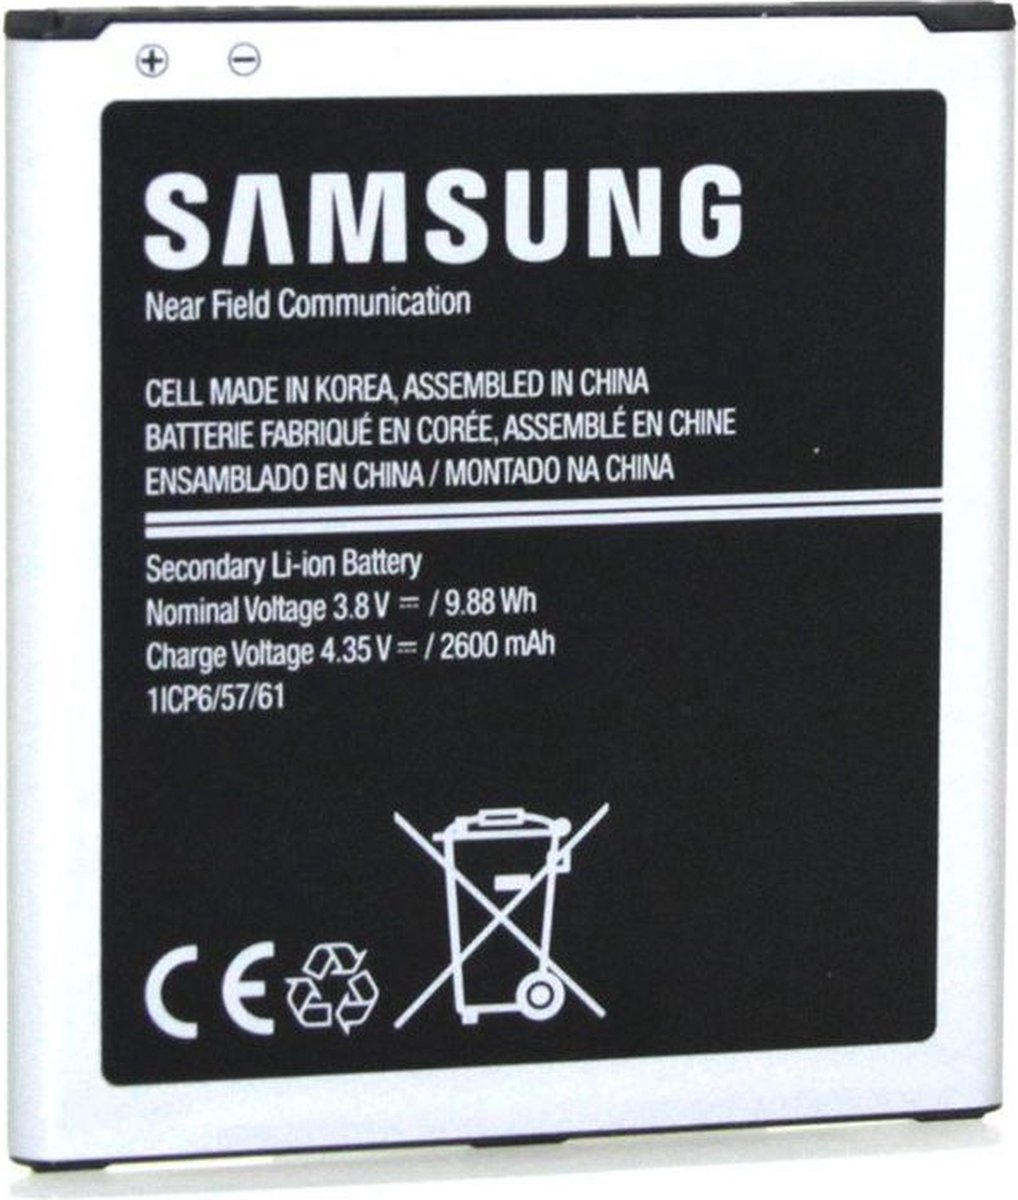 Originele Samsung Galaxy J5 2015/J3 2016 Batterij EB-BG531BBE 2600mAh |  bol.com